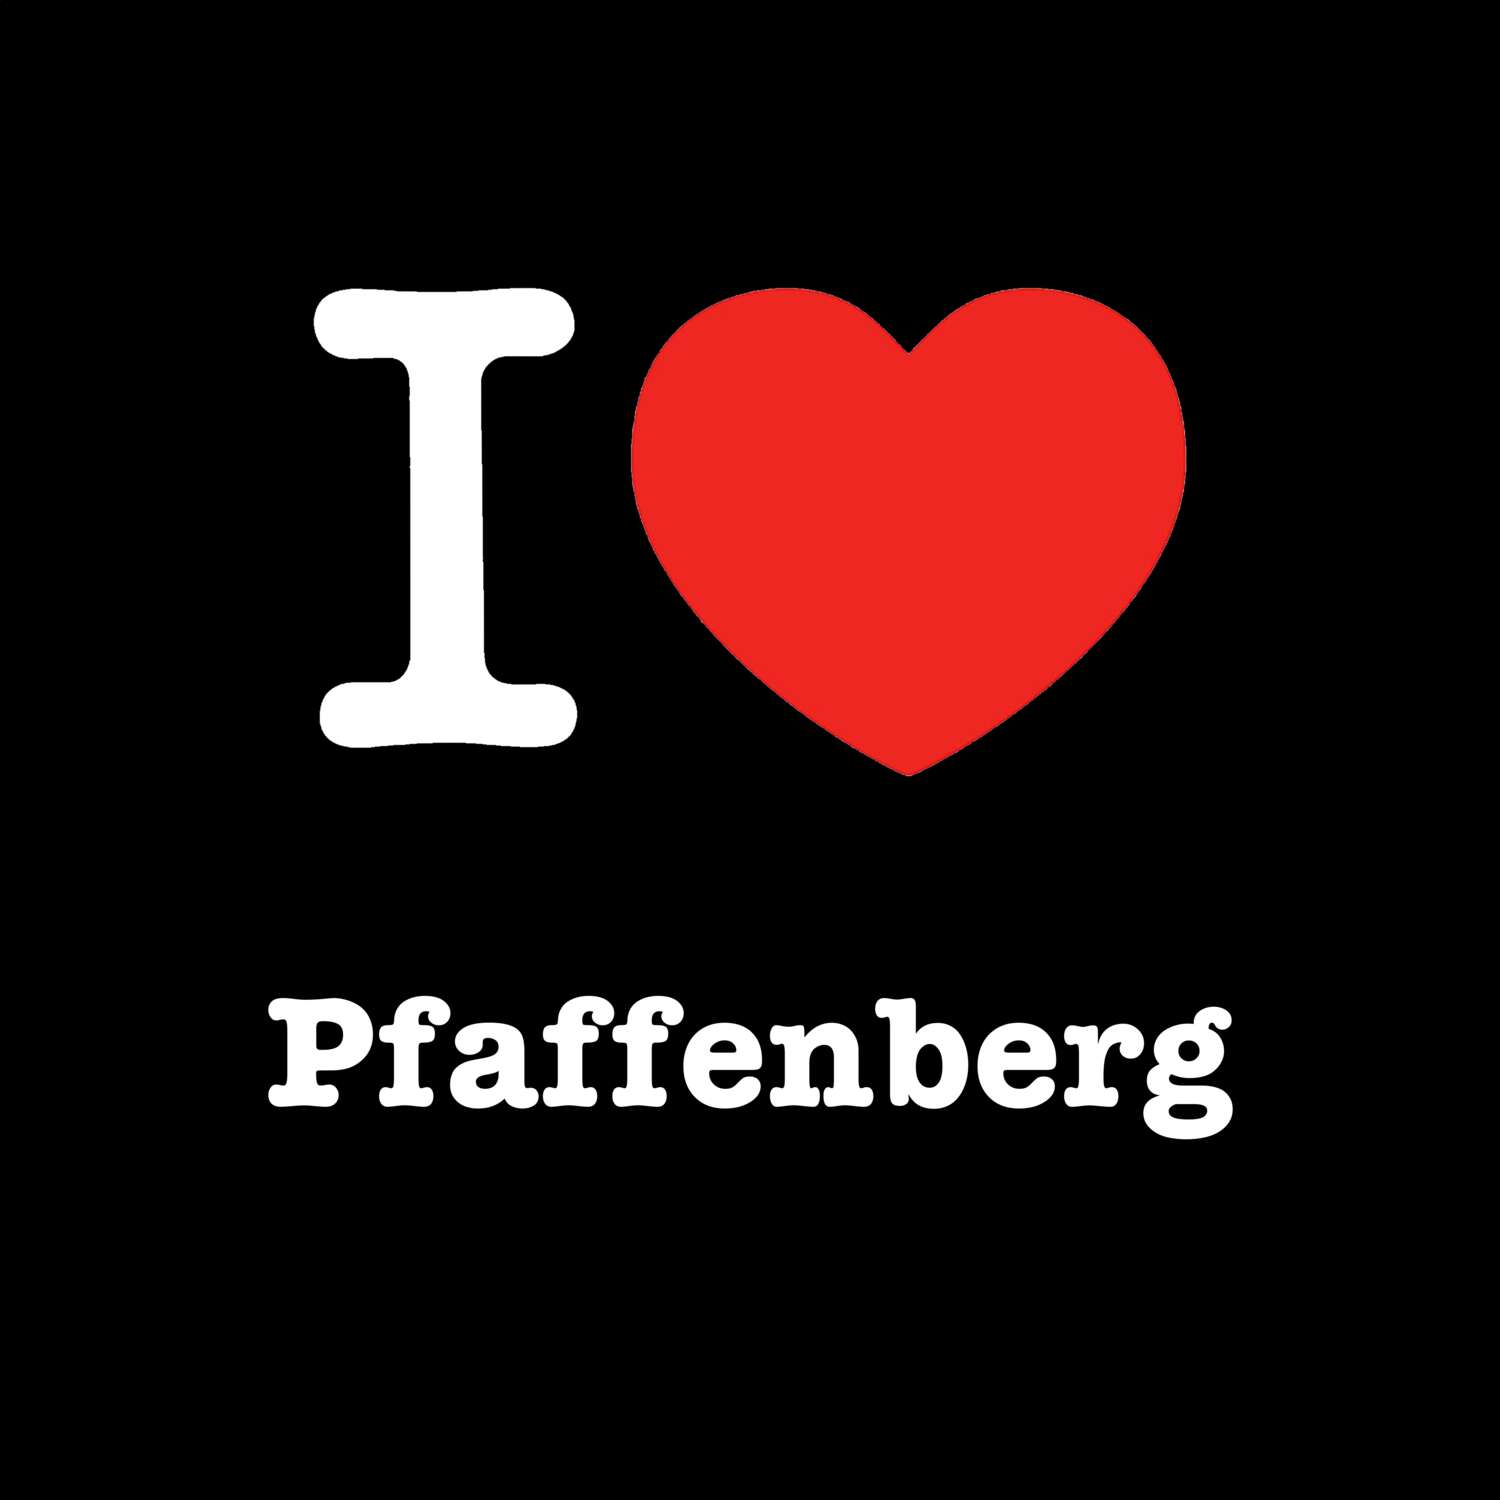 Pfaffenberg T-Shirt »I love«